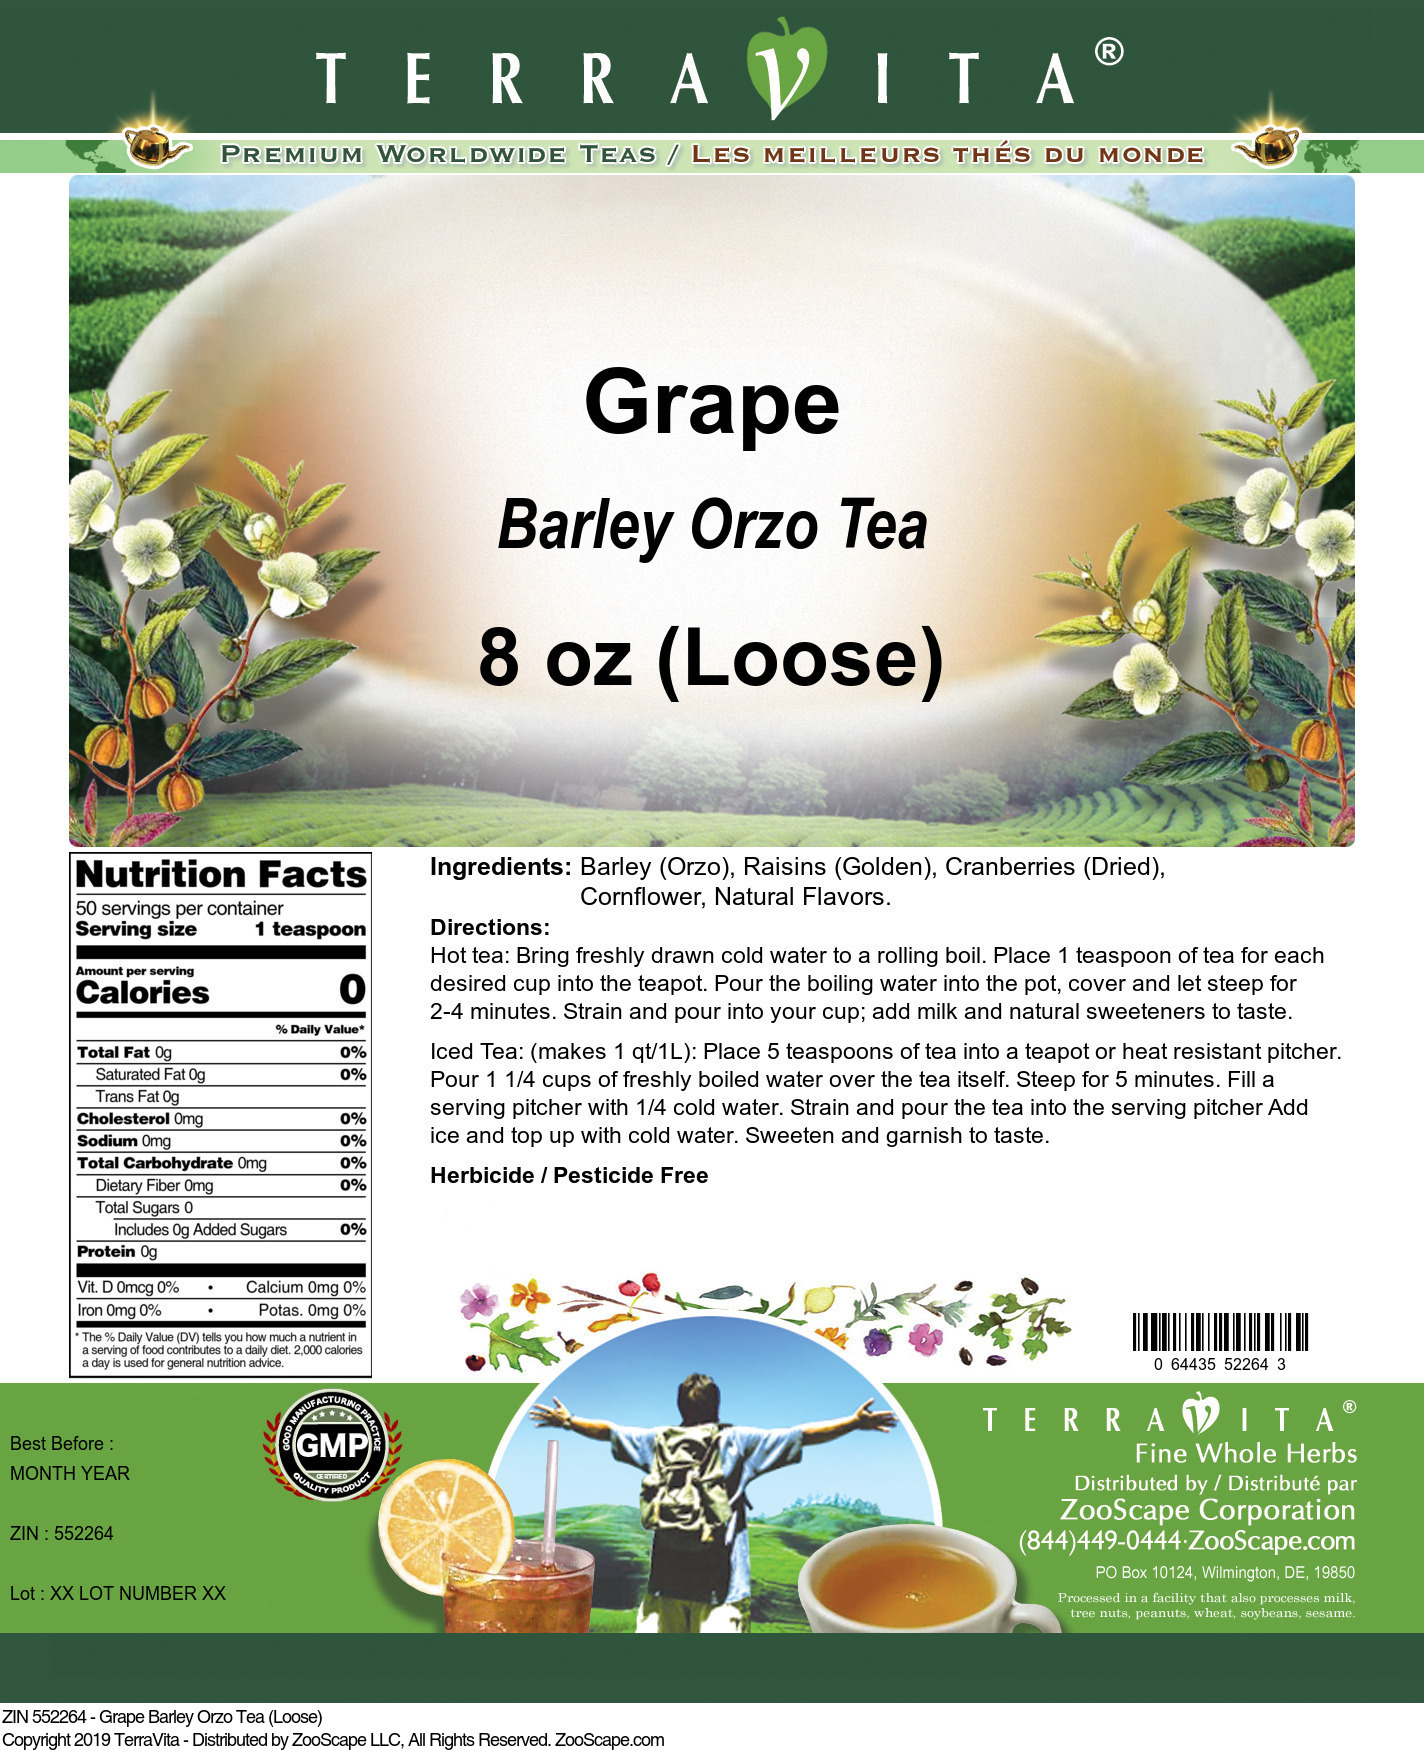 Grape Barley Orzo Tea (Loose) - Label